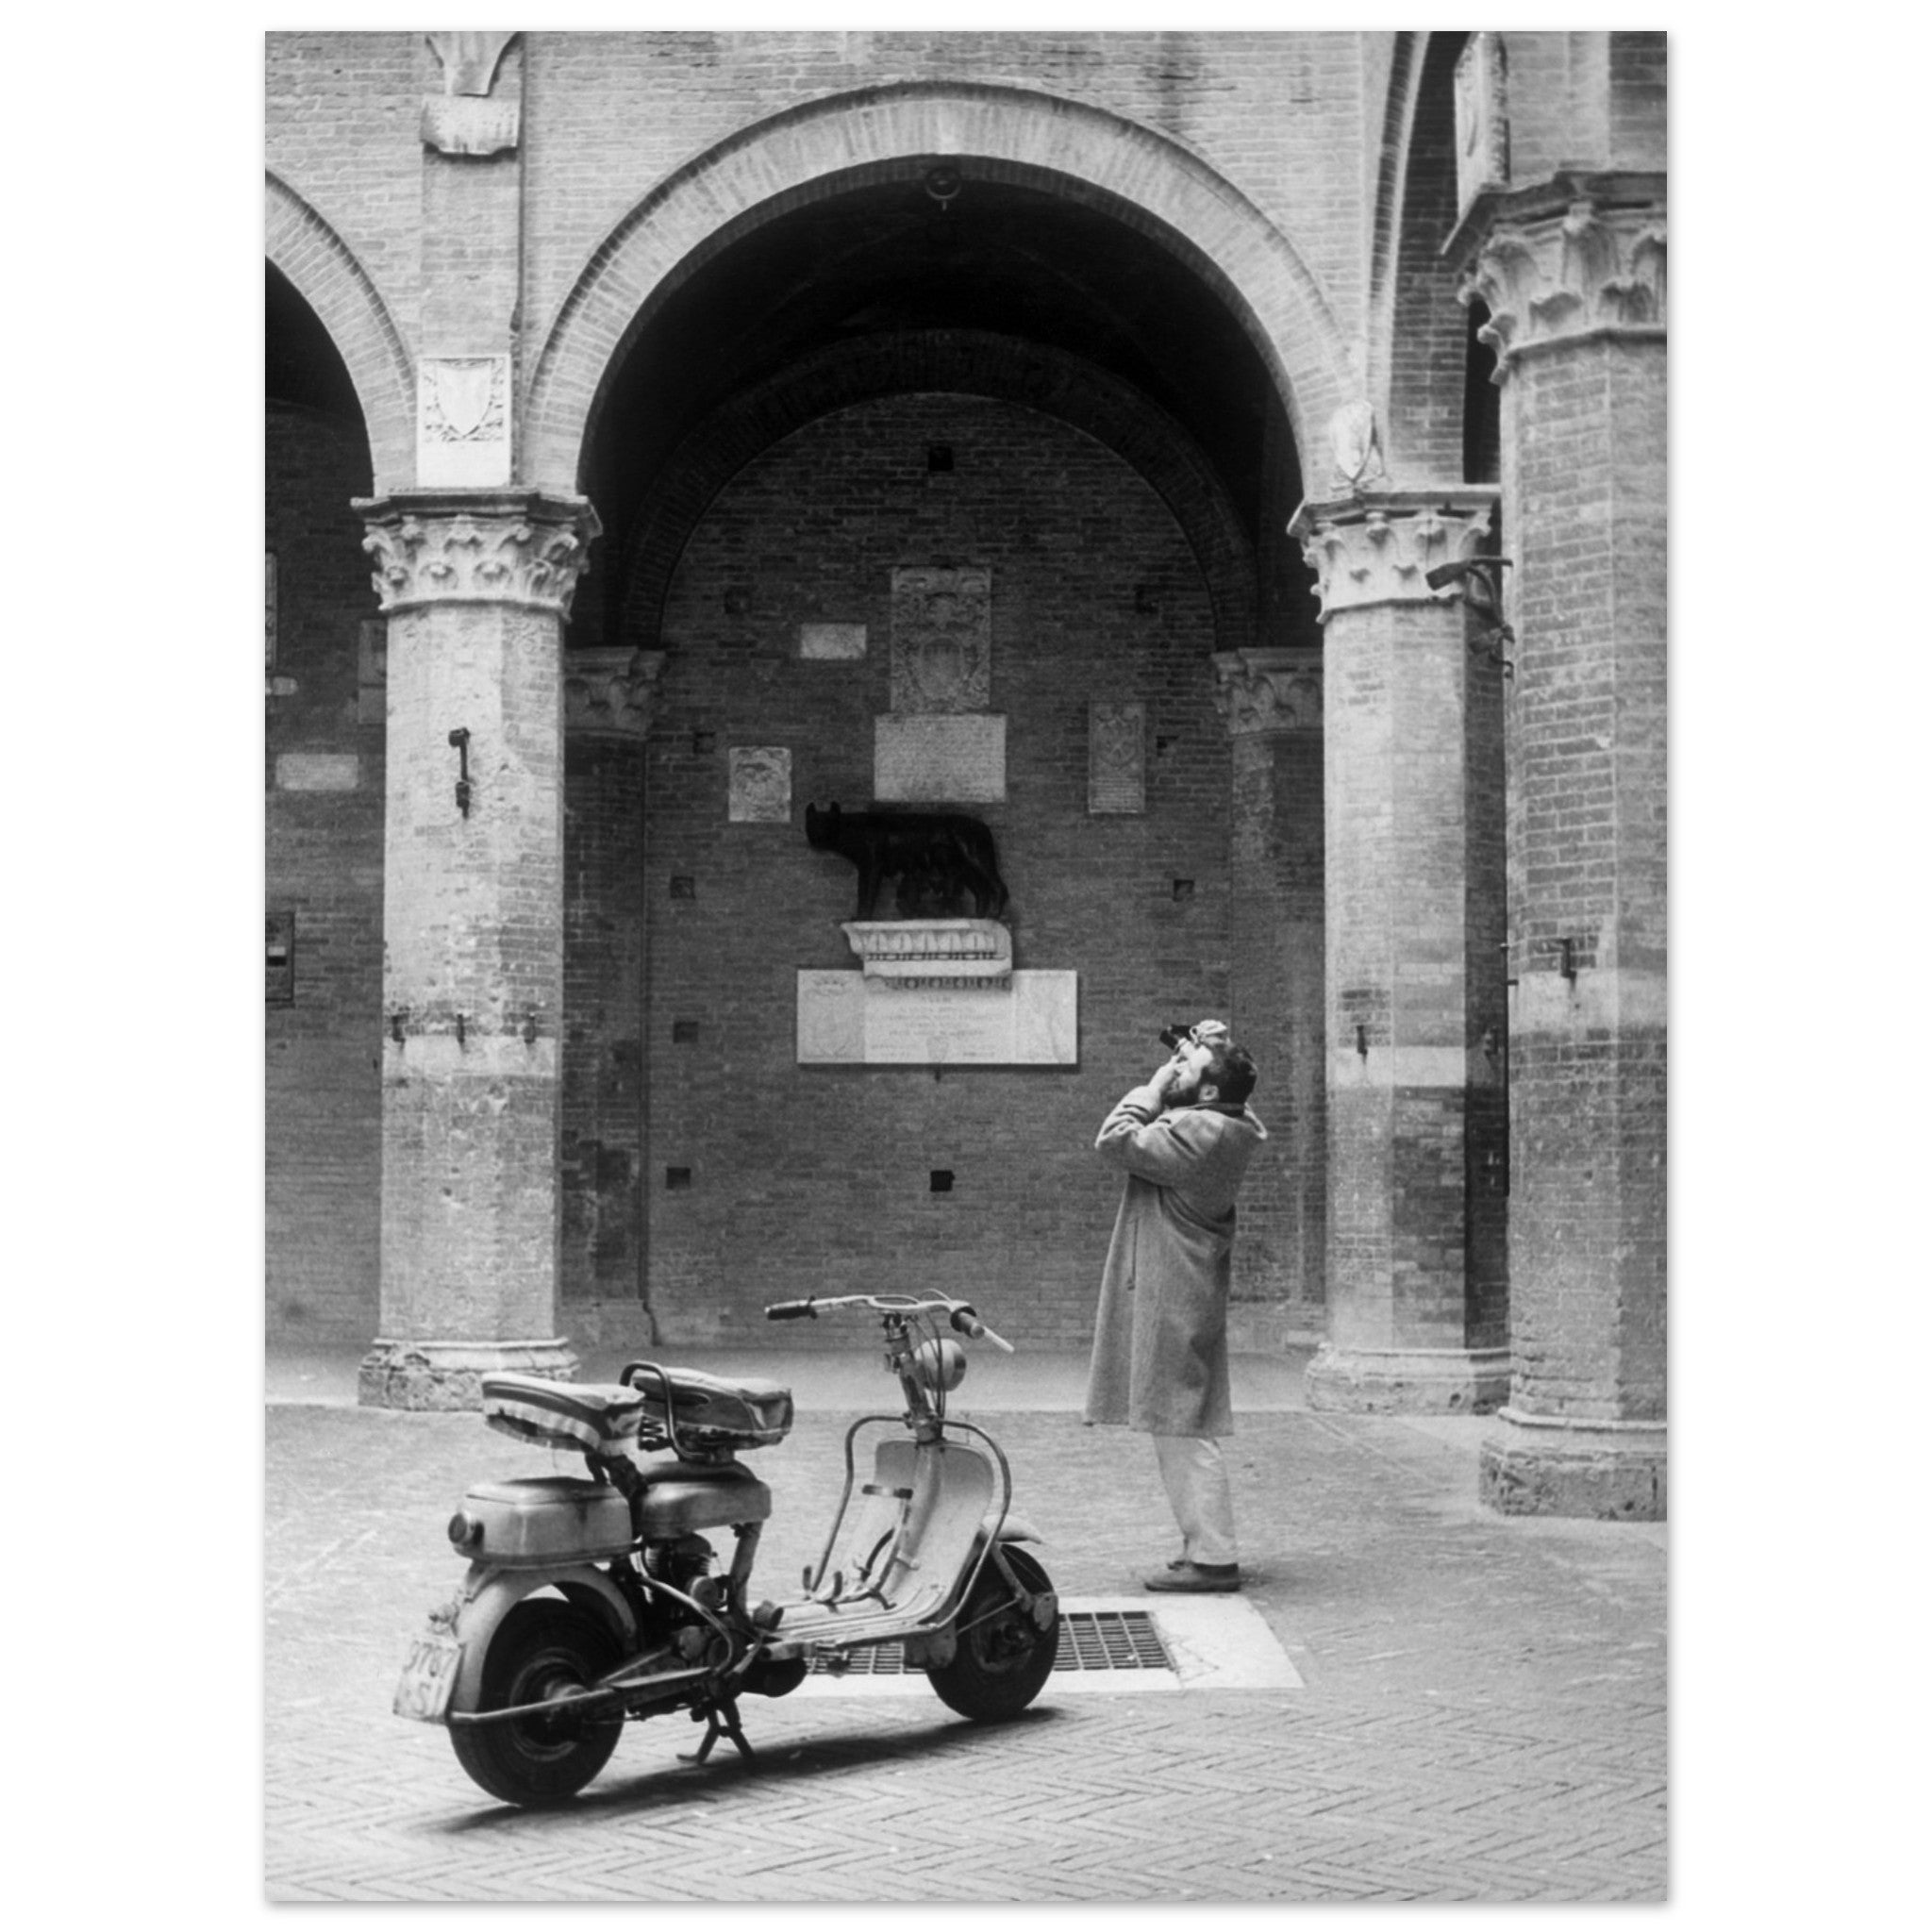 1131272 Photographer, Court Of Podestà, Siena, Tuscany, Italy 1962